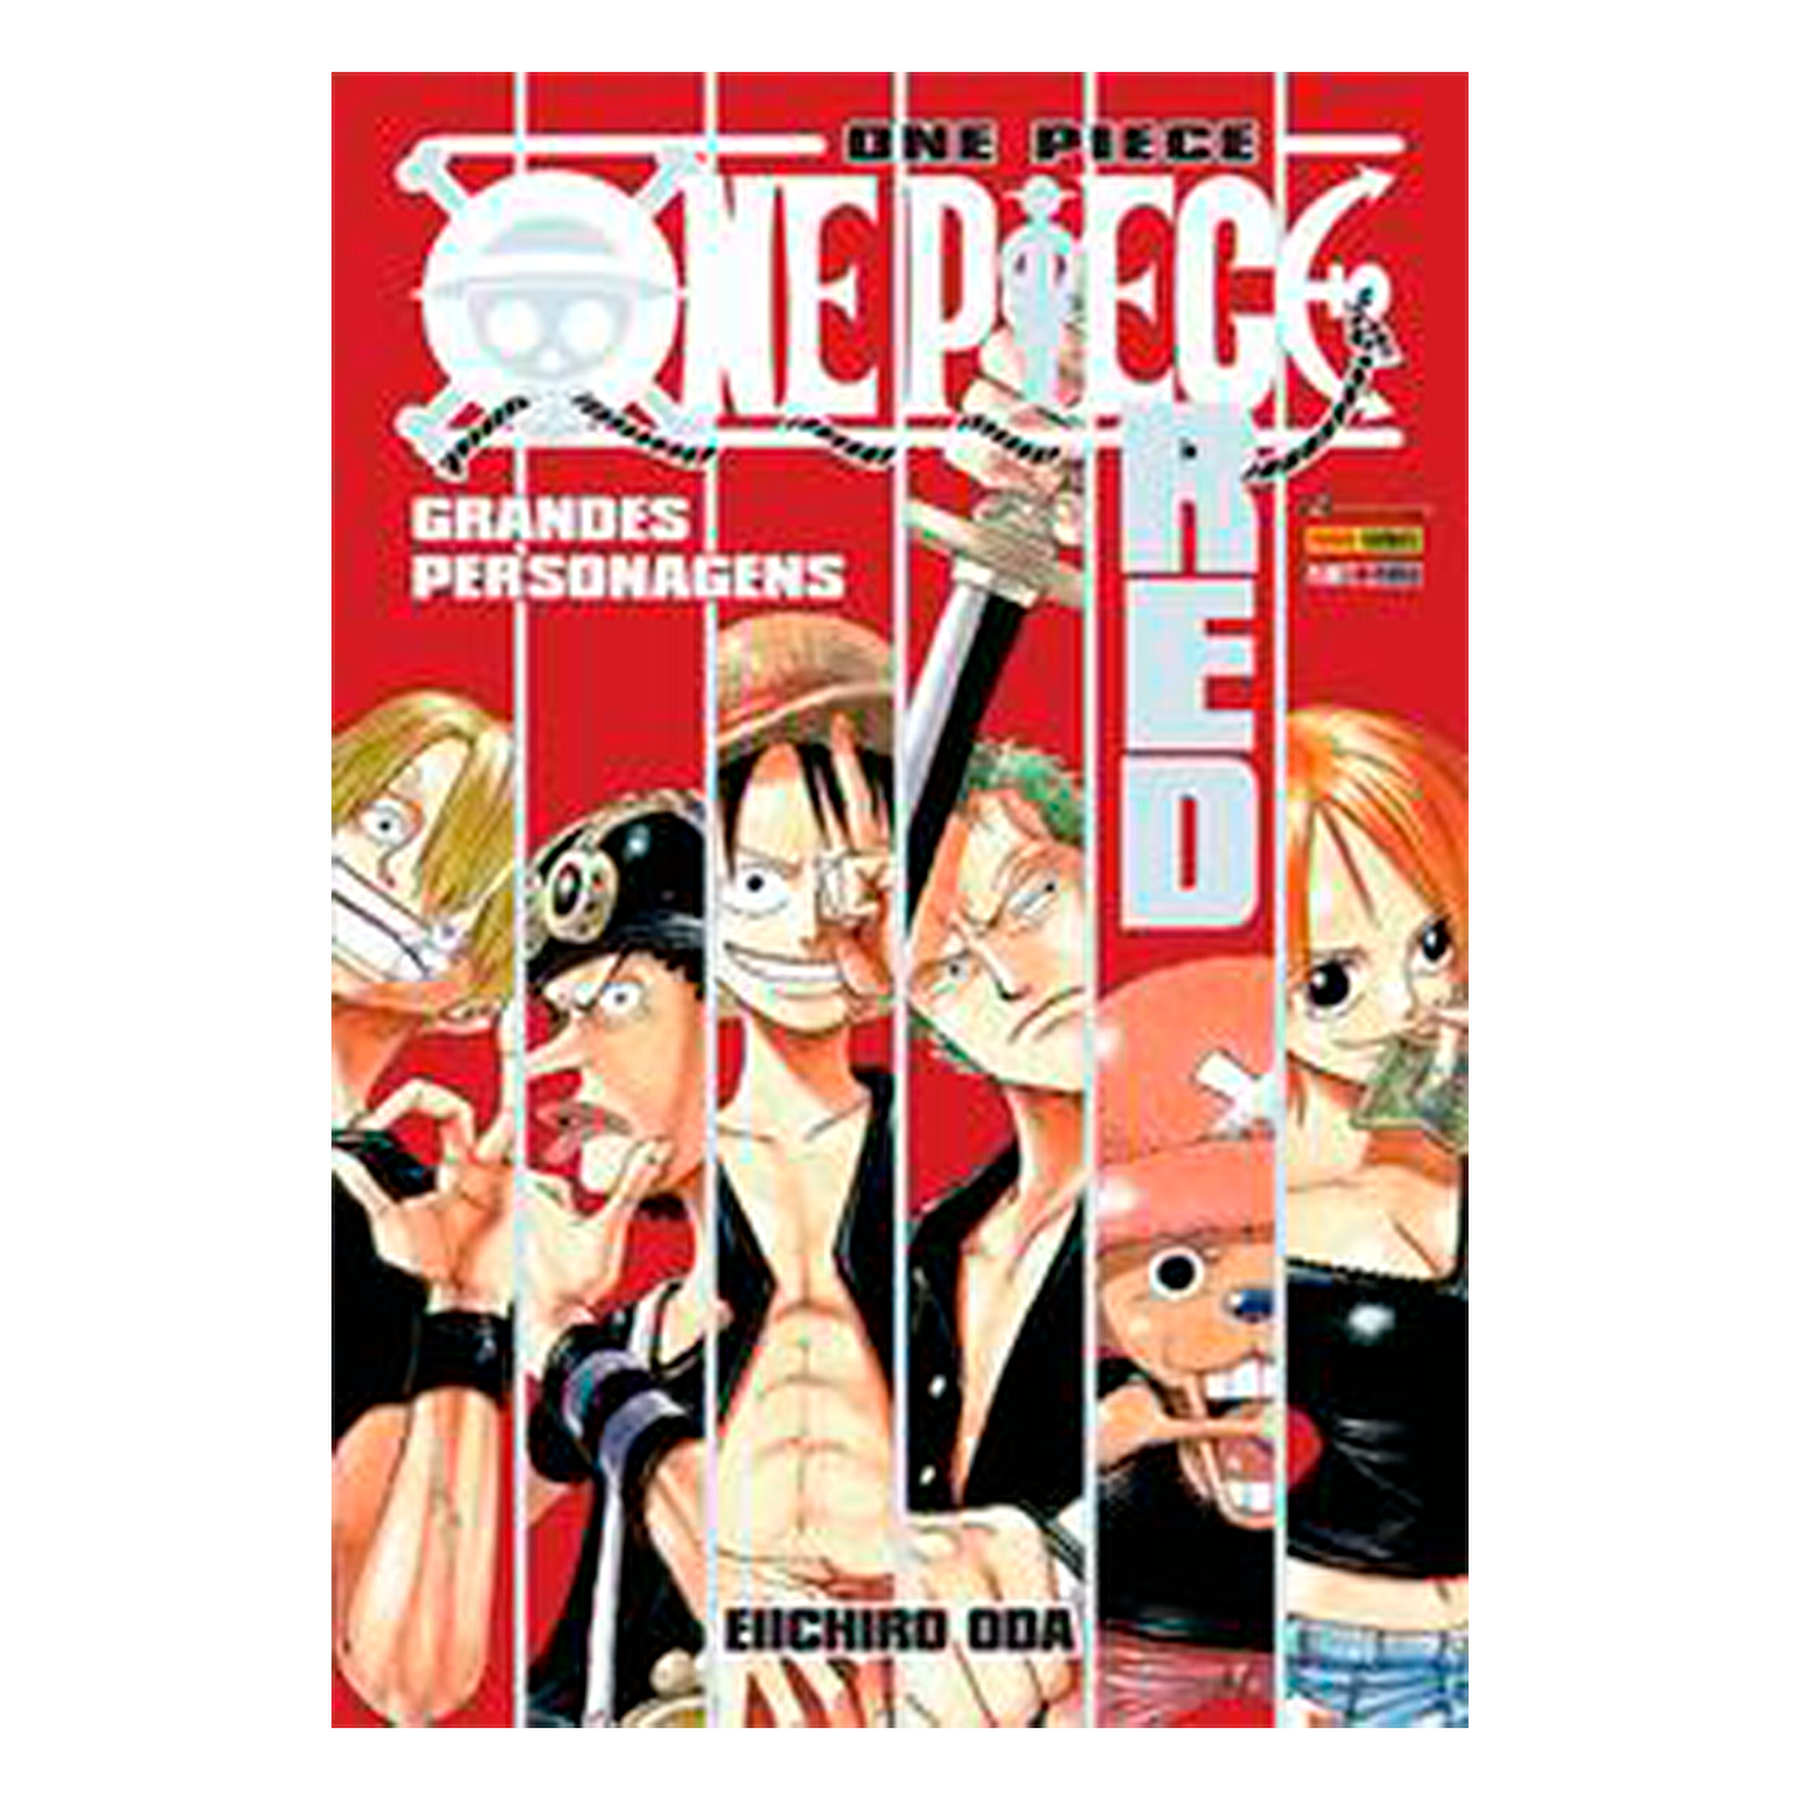 Livro Red One Piece